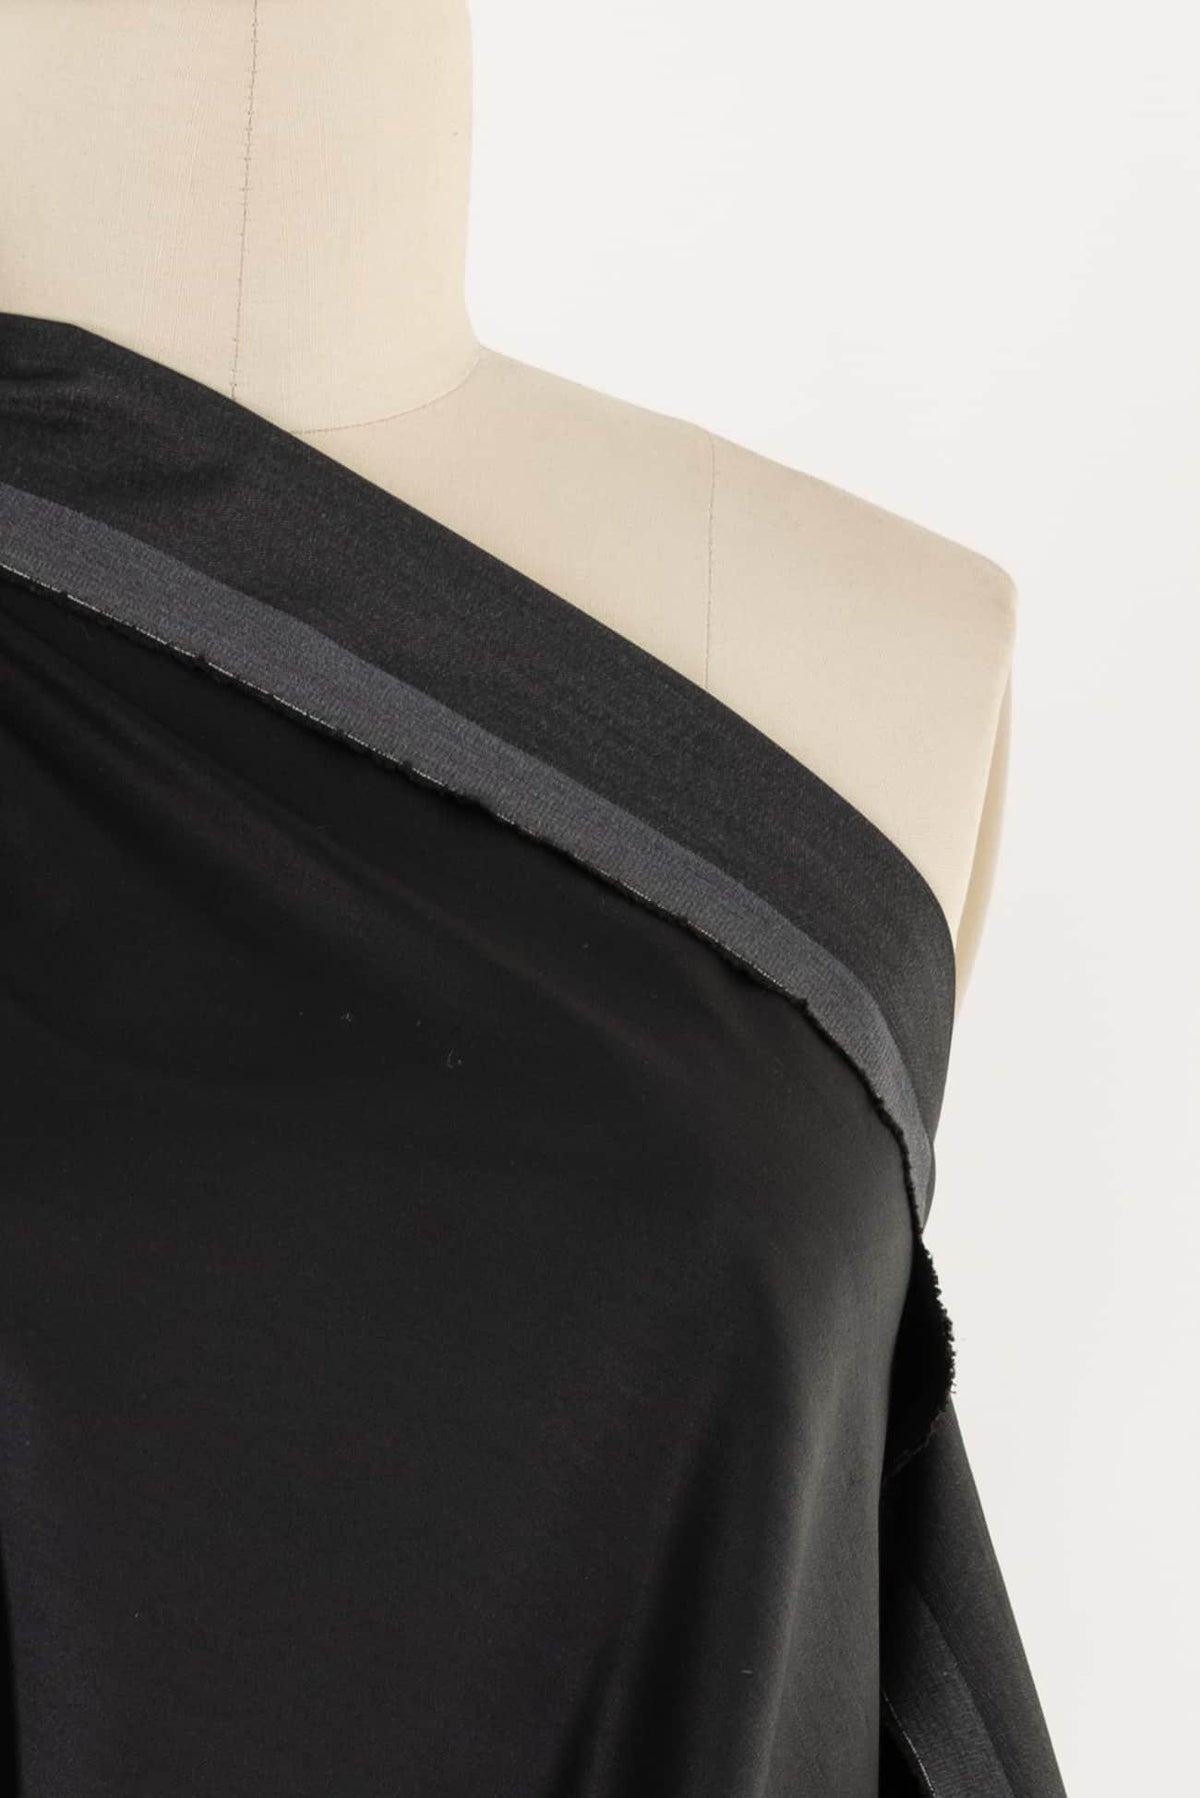 Designer Stretch Woven Fashion Fabrics – Marcy Tilton Fabrics